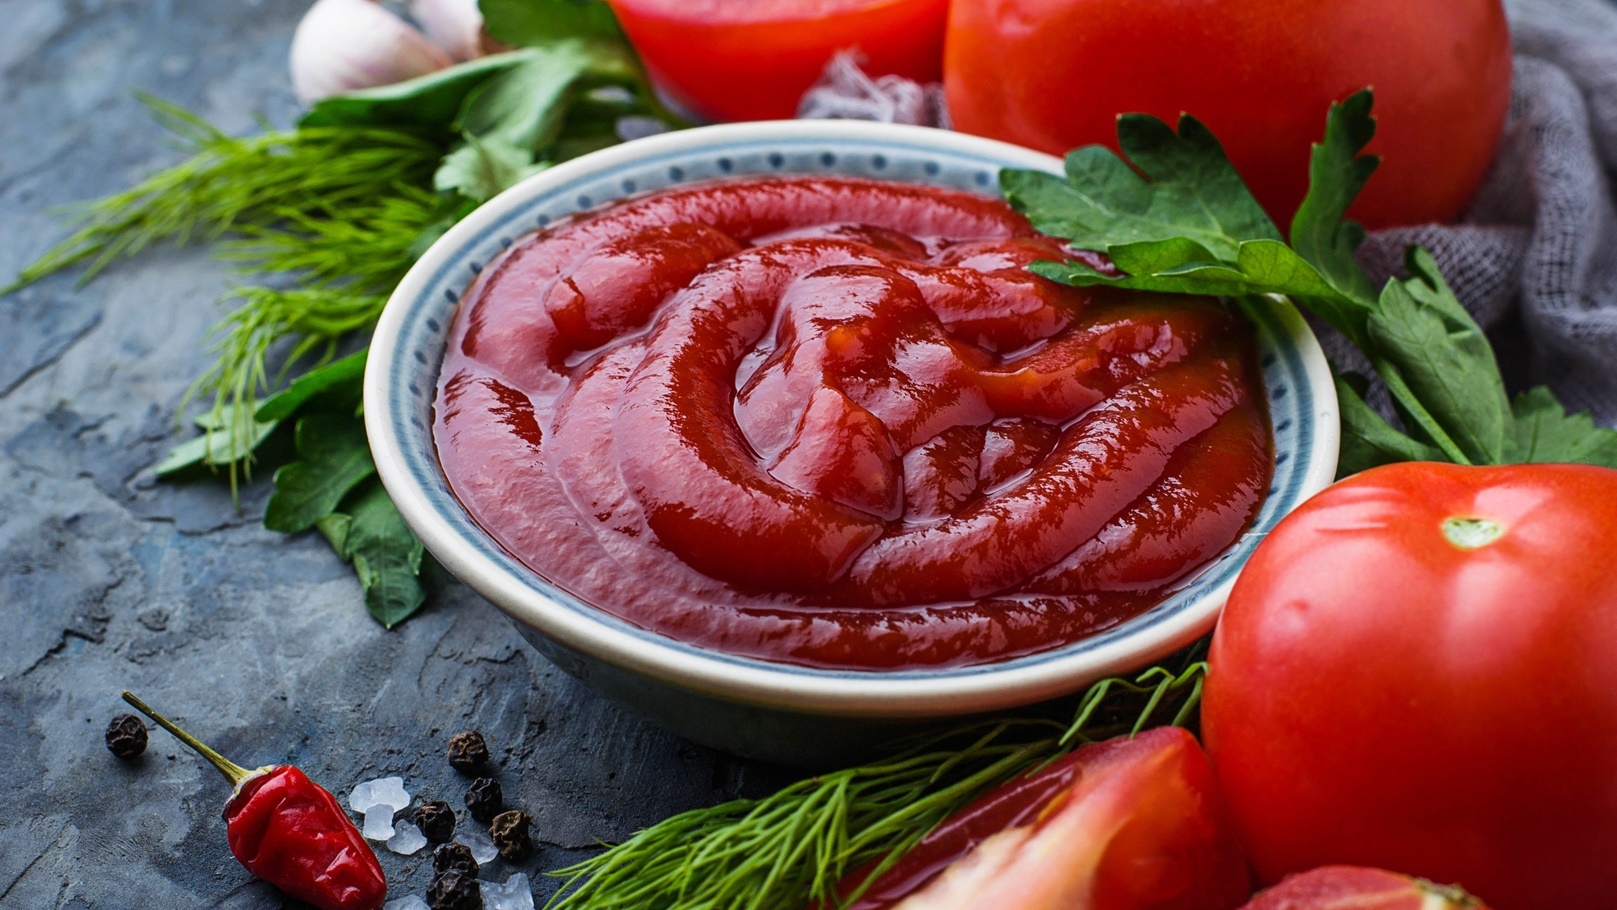 tomato-ketchup-sauce-on-concrete-background-2021-08-26-19-01-47-utc